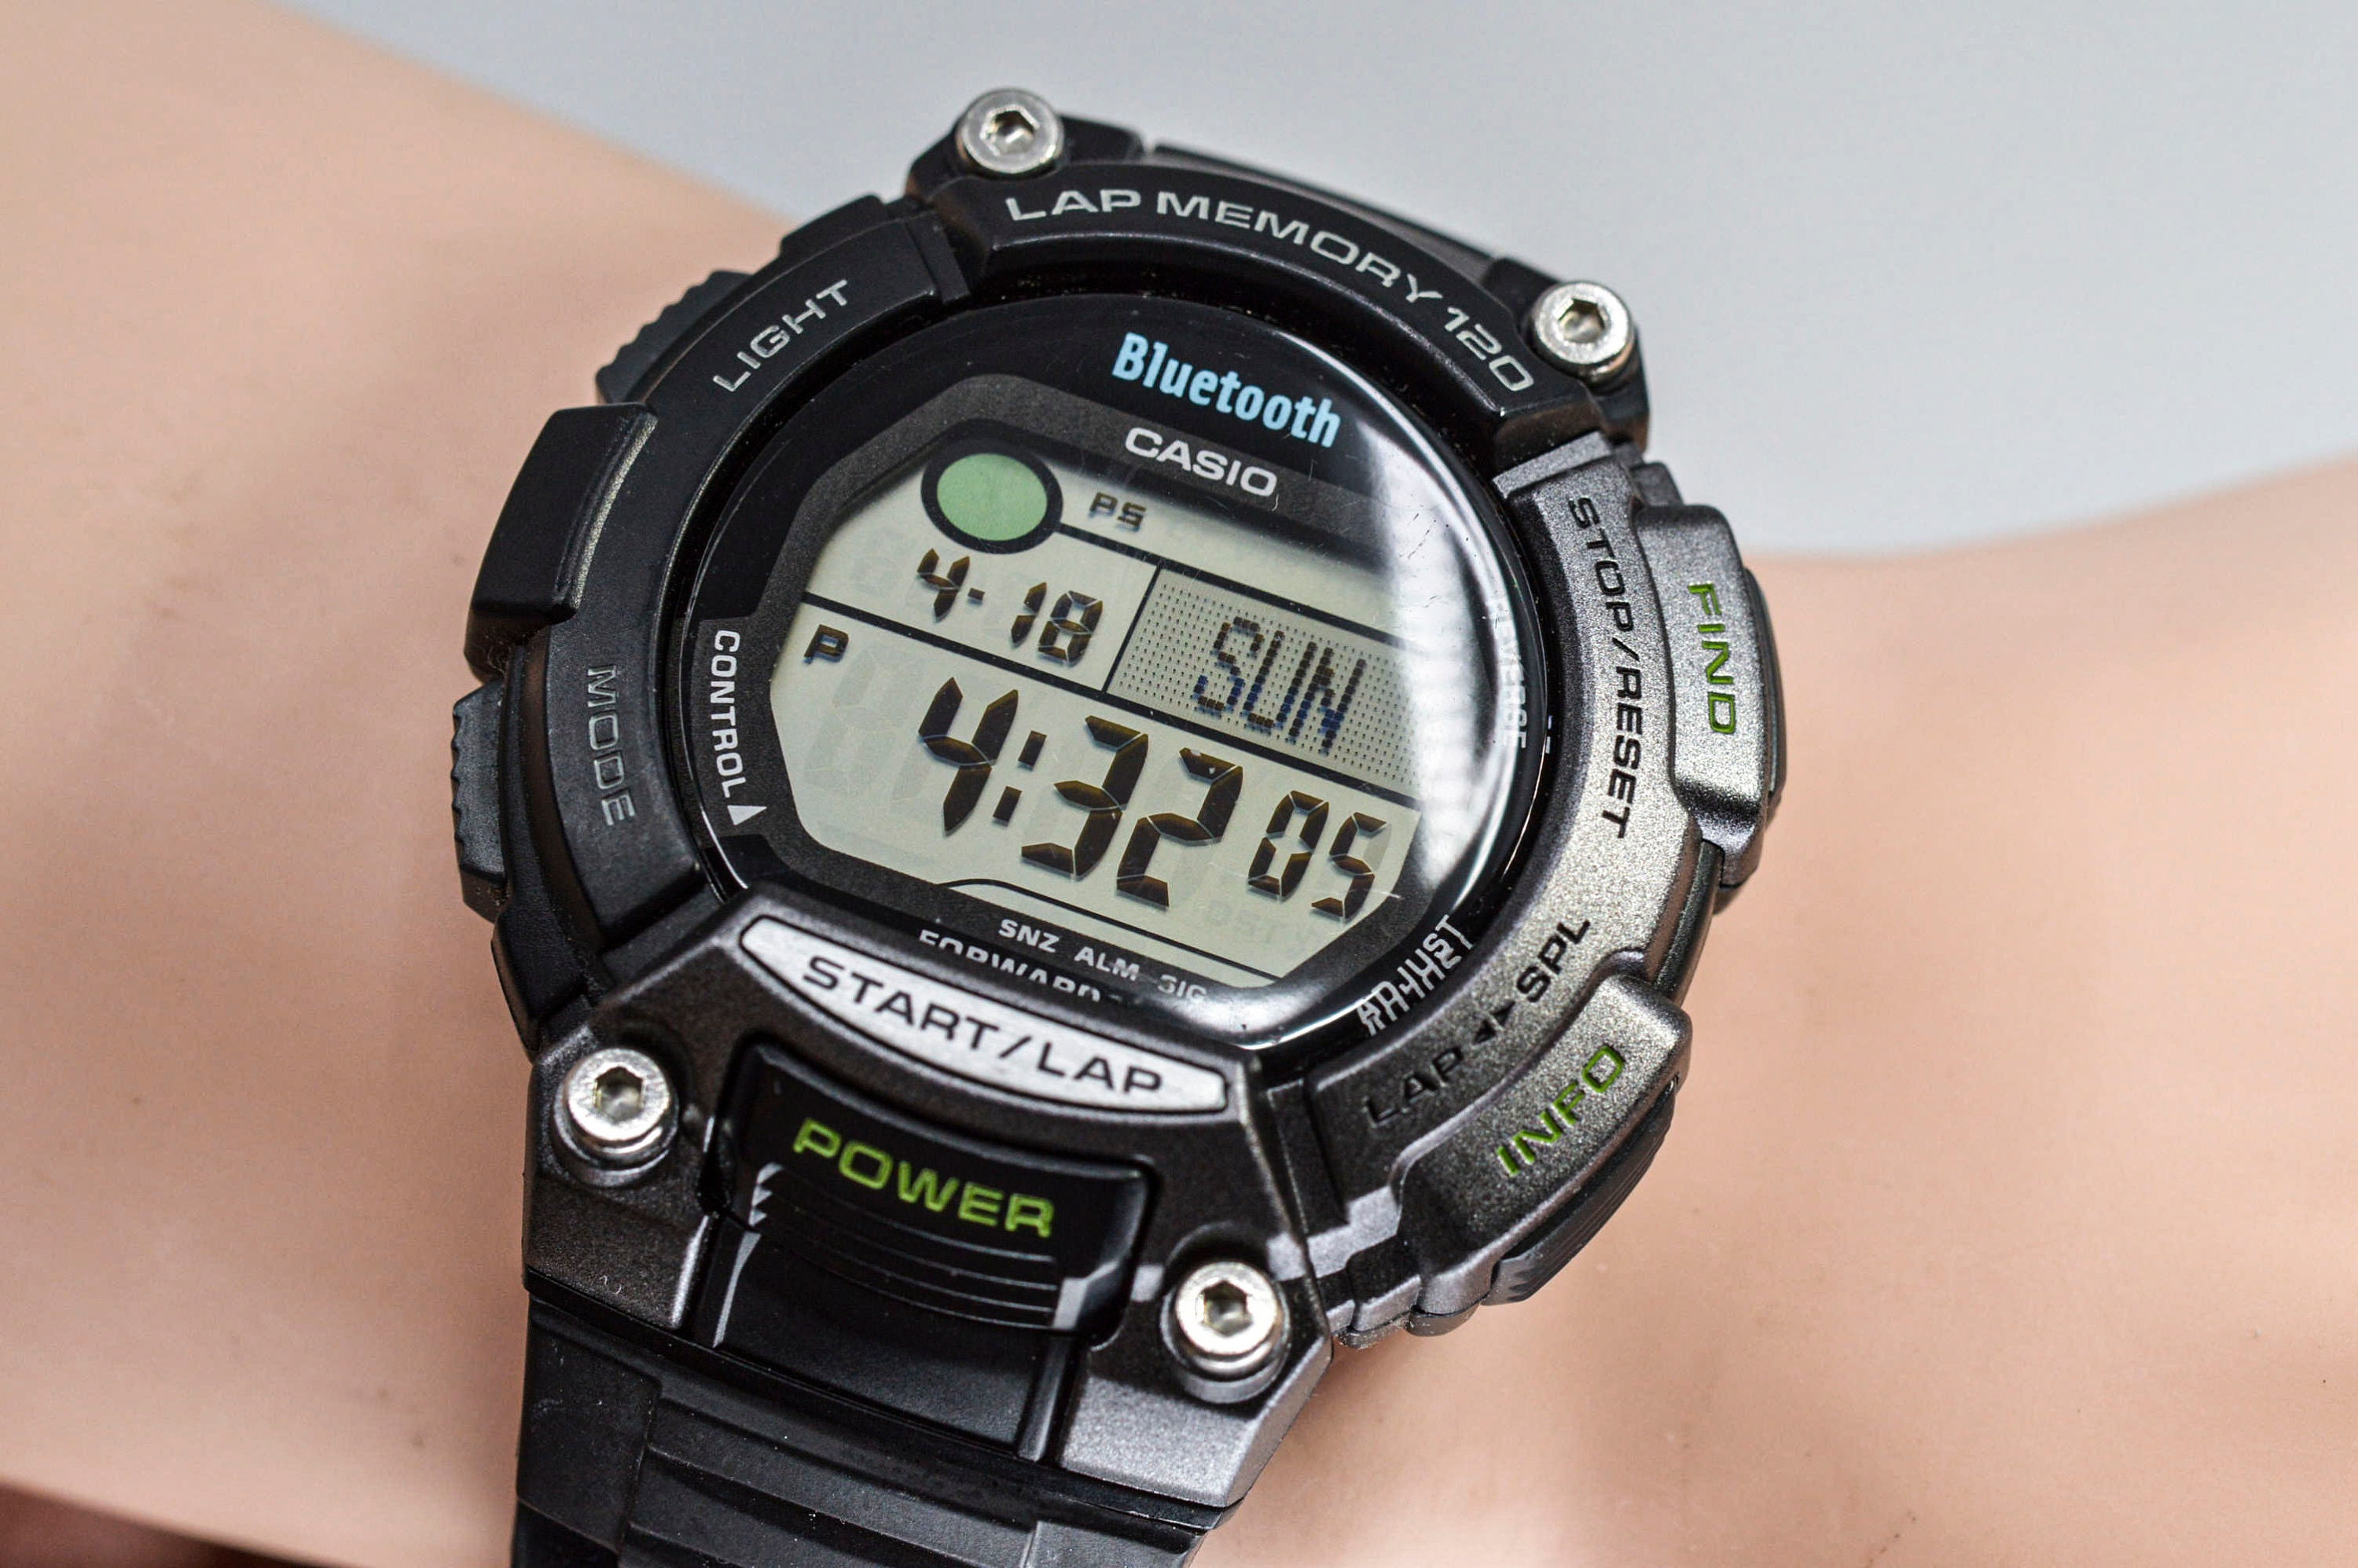 Casio Bluetooth Lap Memory 120 Black Tone Digital Wrist Watch - Etsy